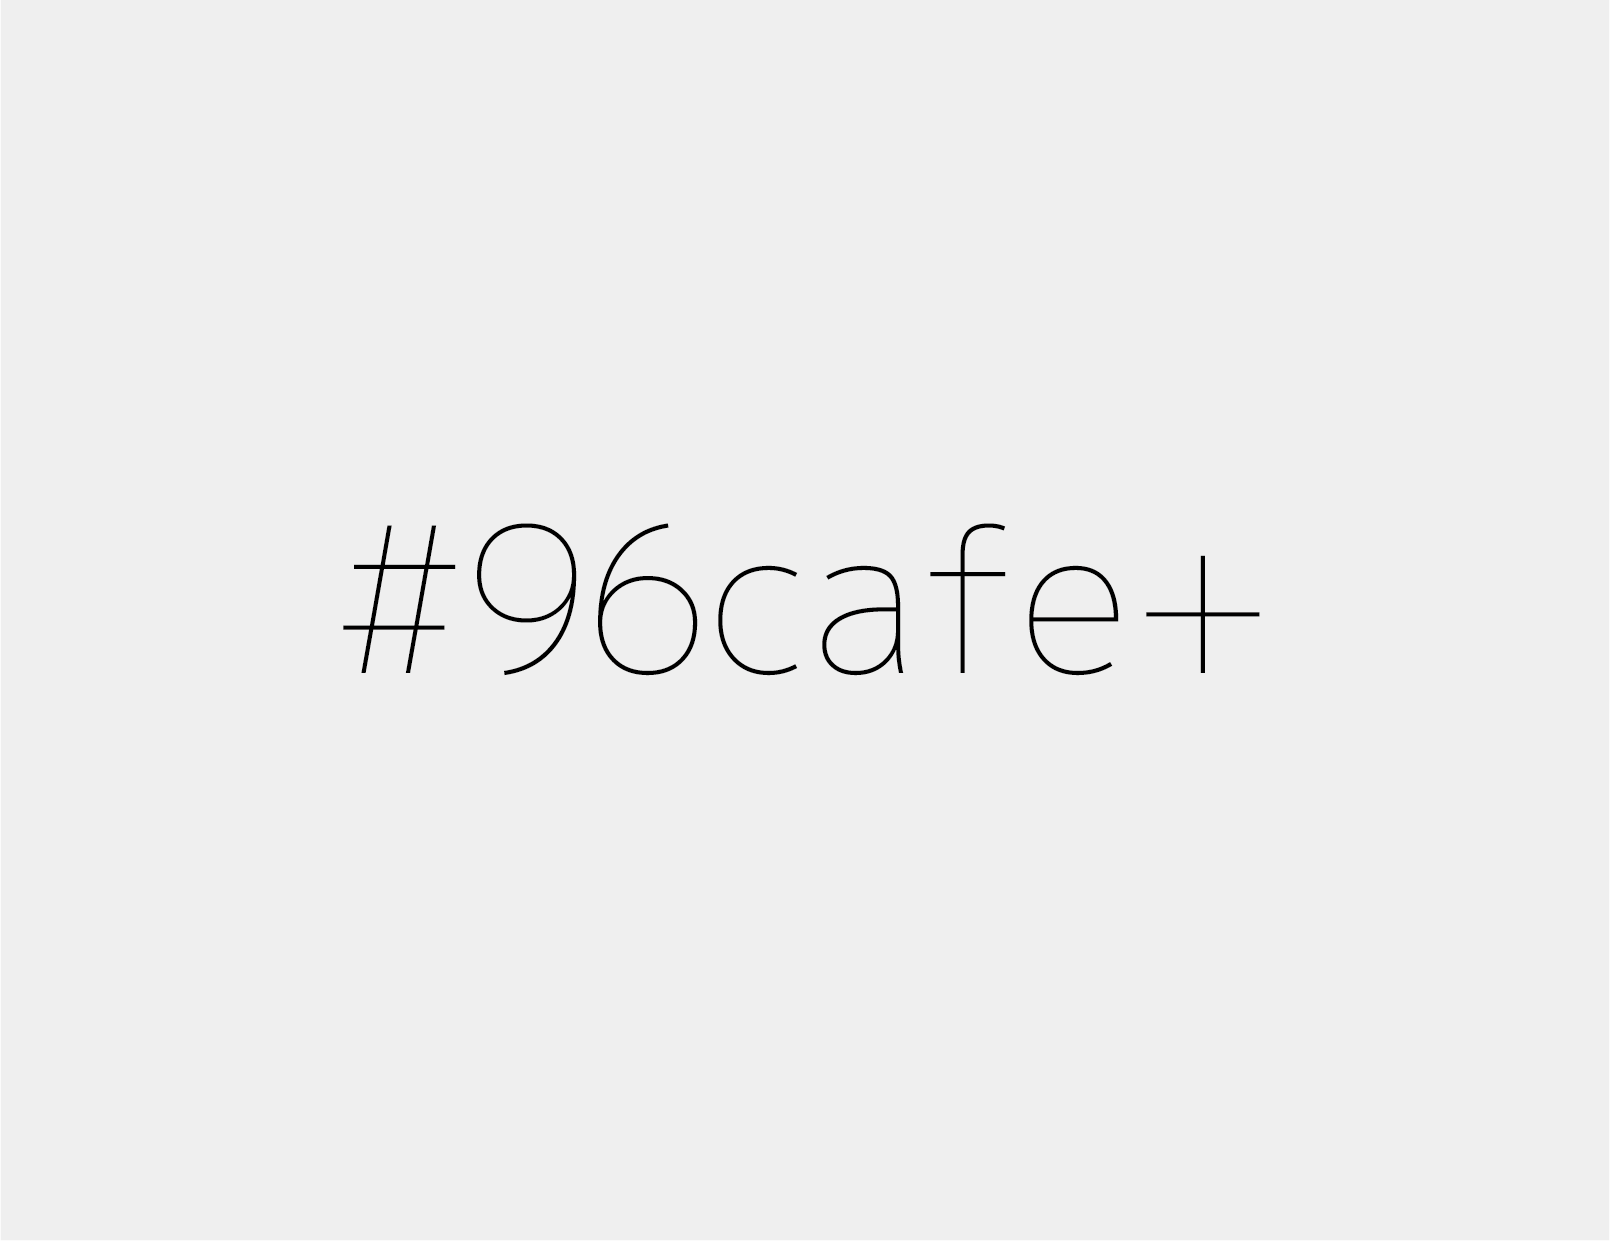 #96cafe+